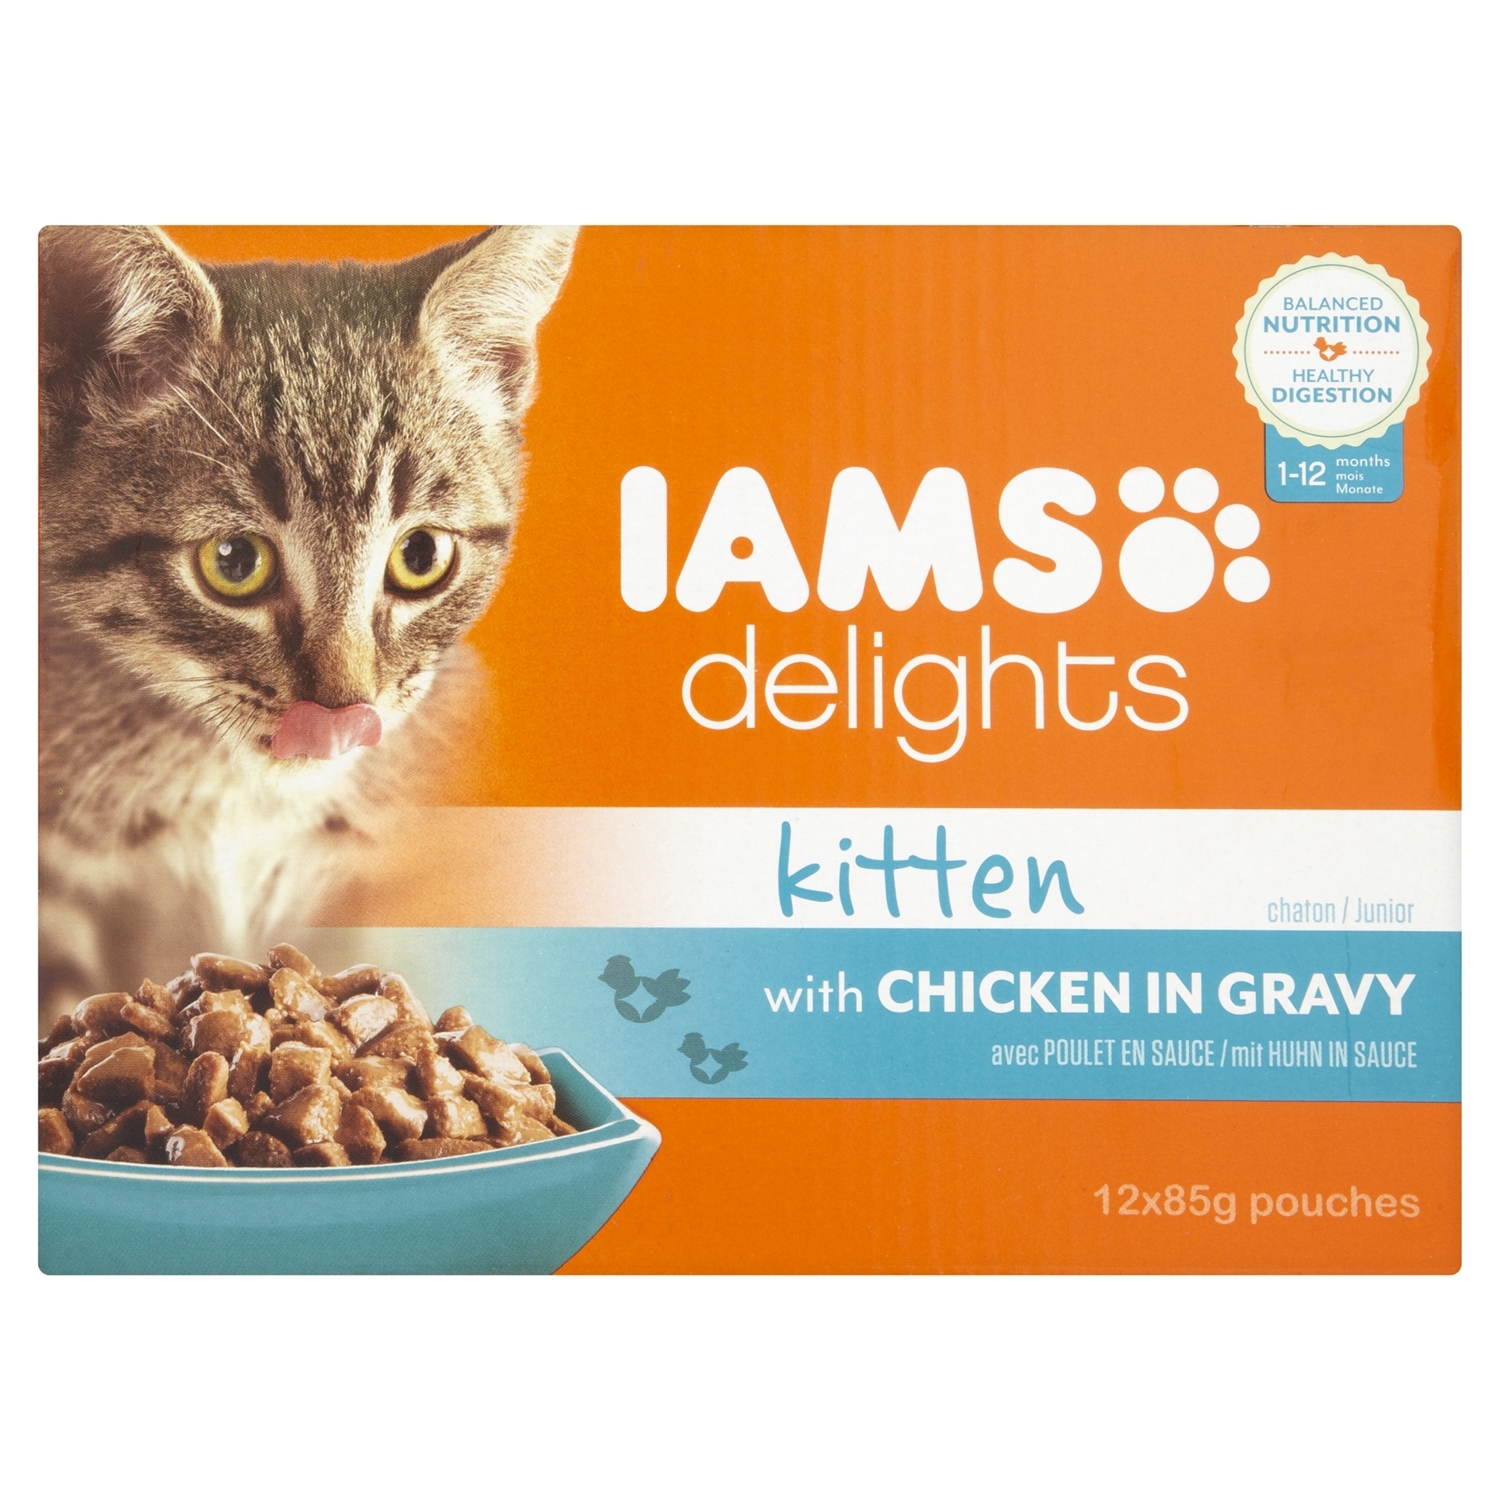 Iams Delights Chicken in Gravy Cat Food 12 Pack Image